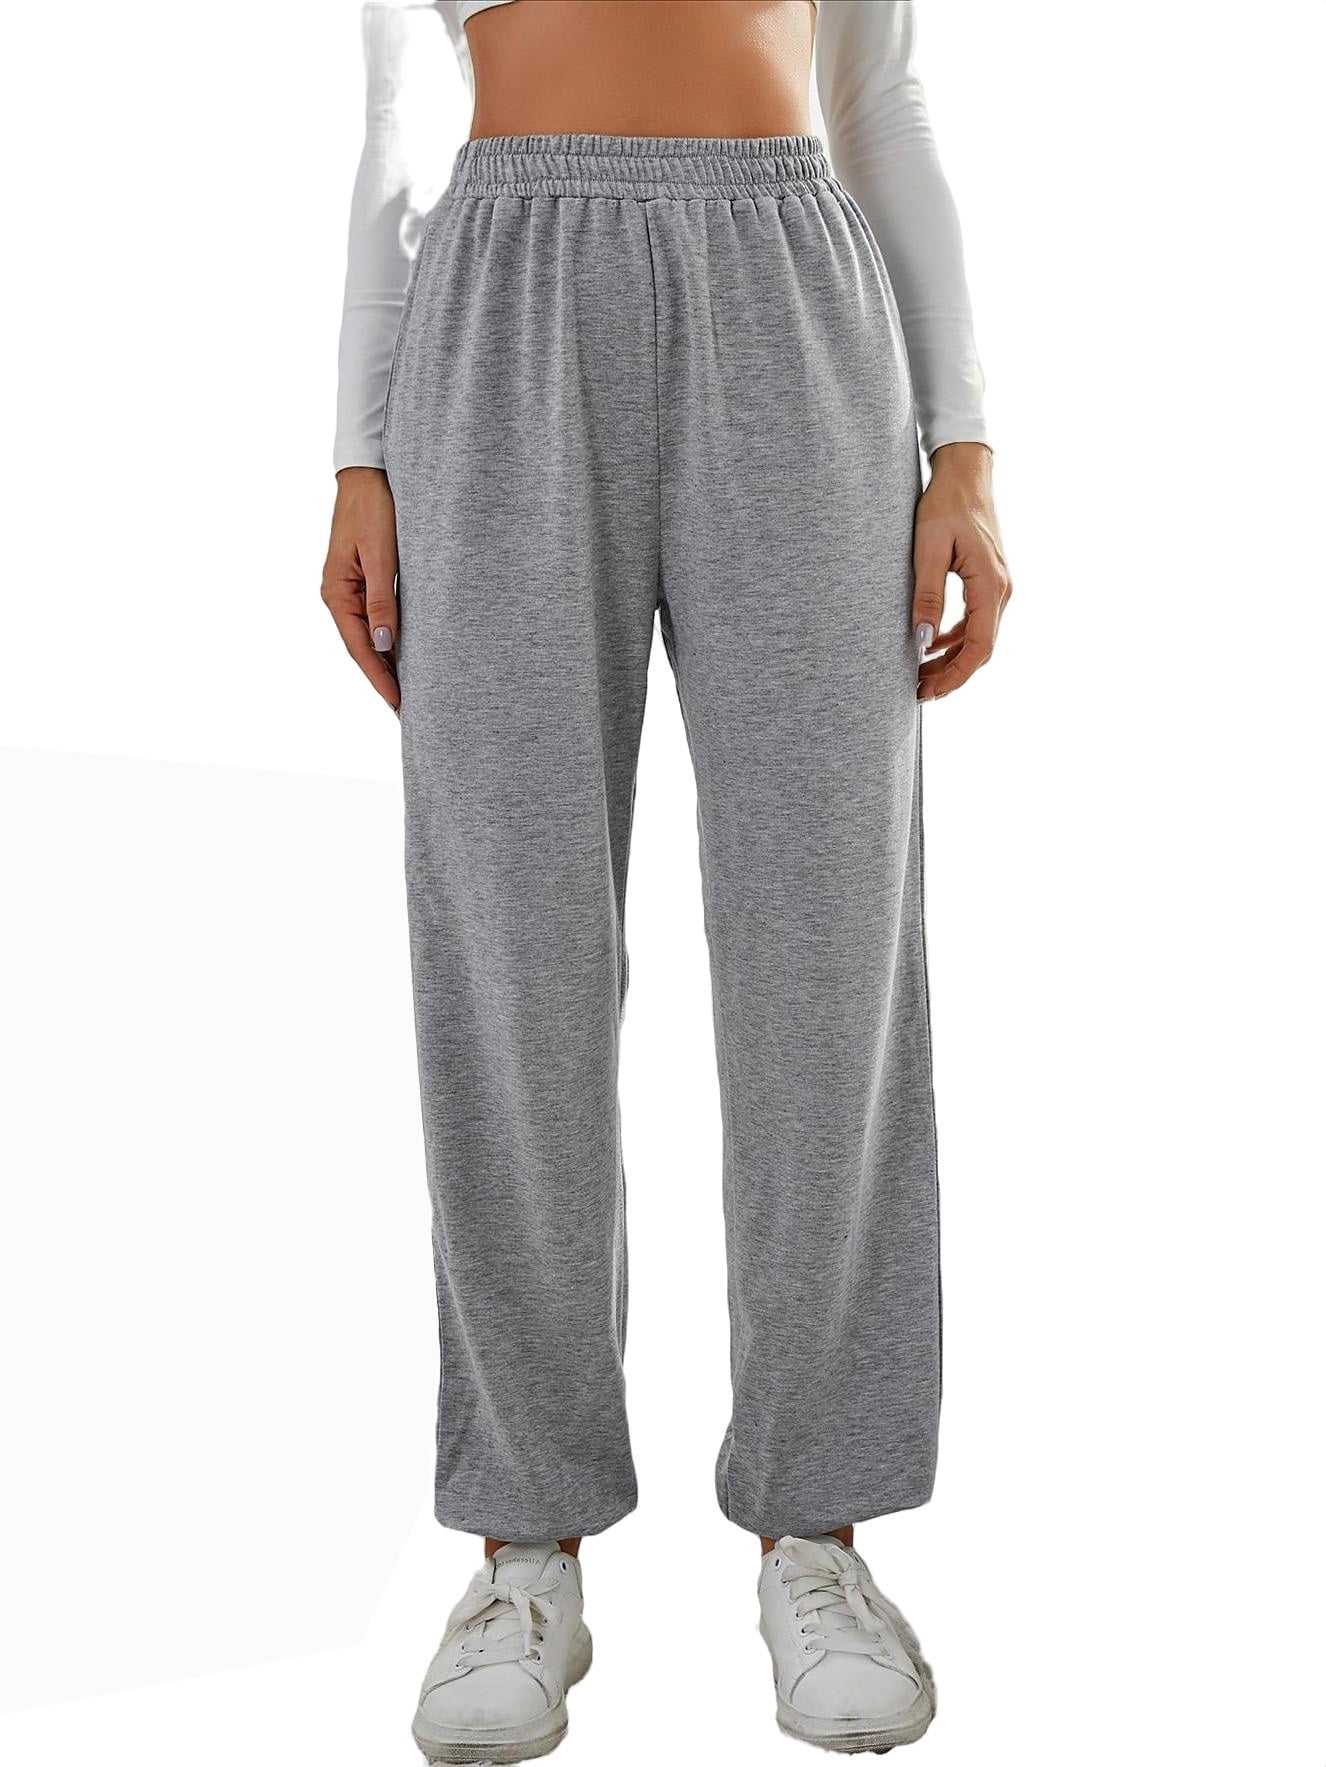 Womens Casual Pants Drawstring Waist Solid Sweatpants Light Grey XS